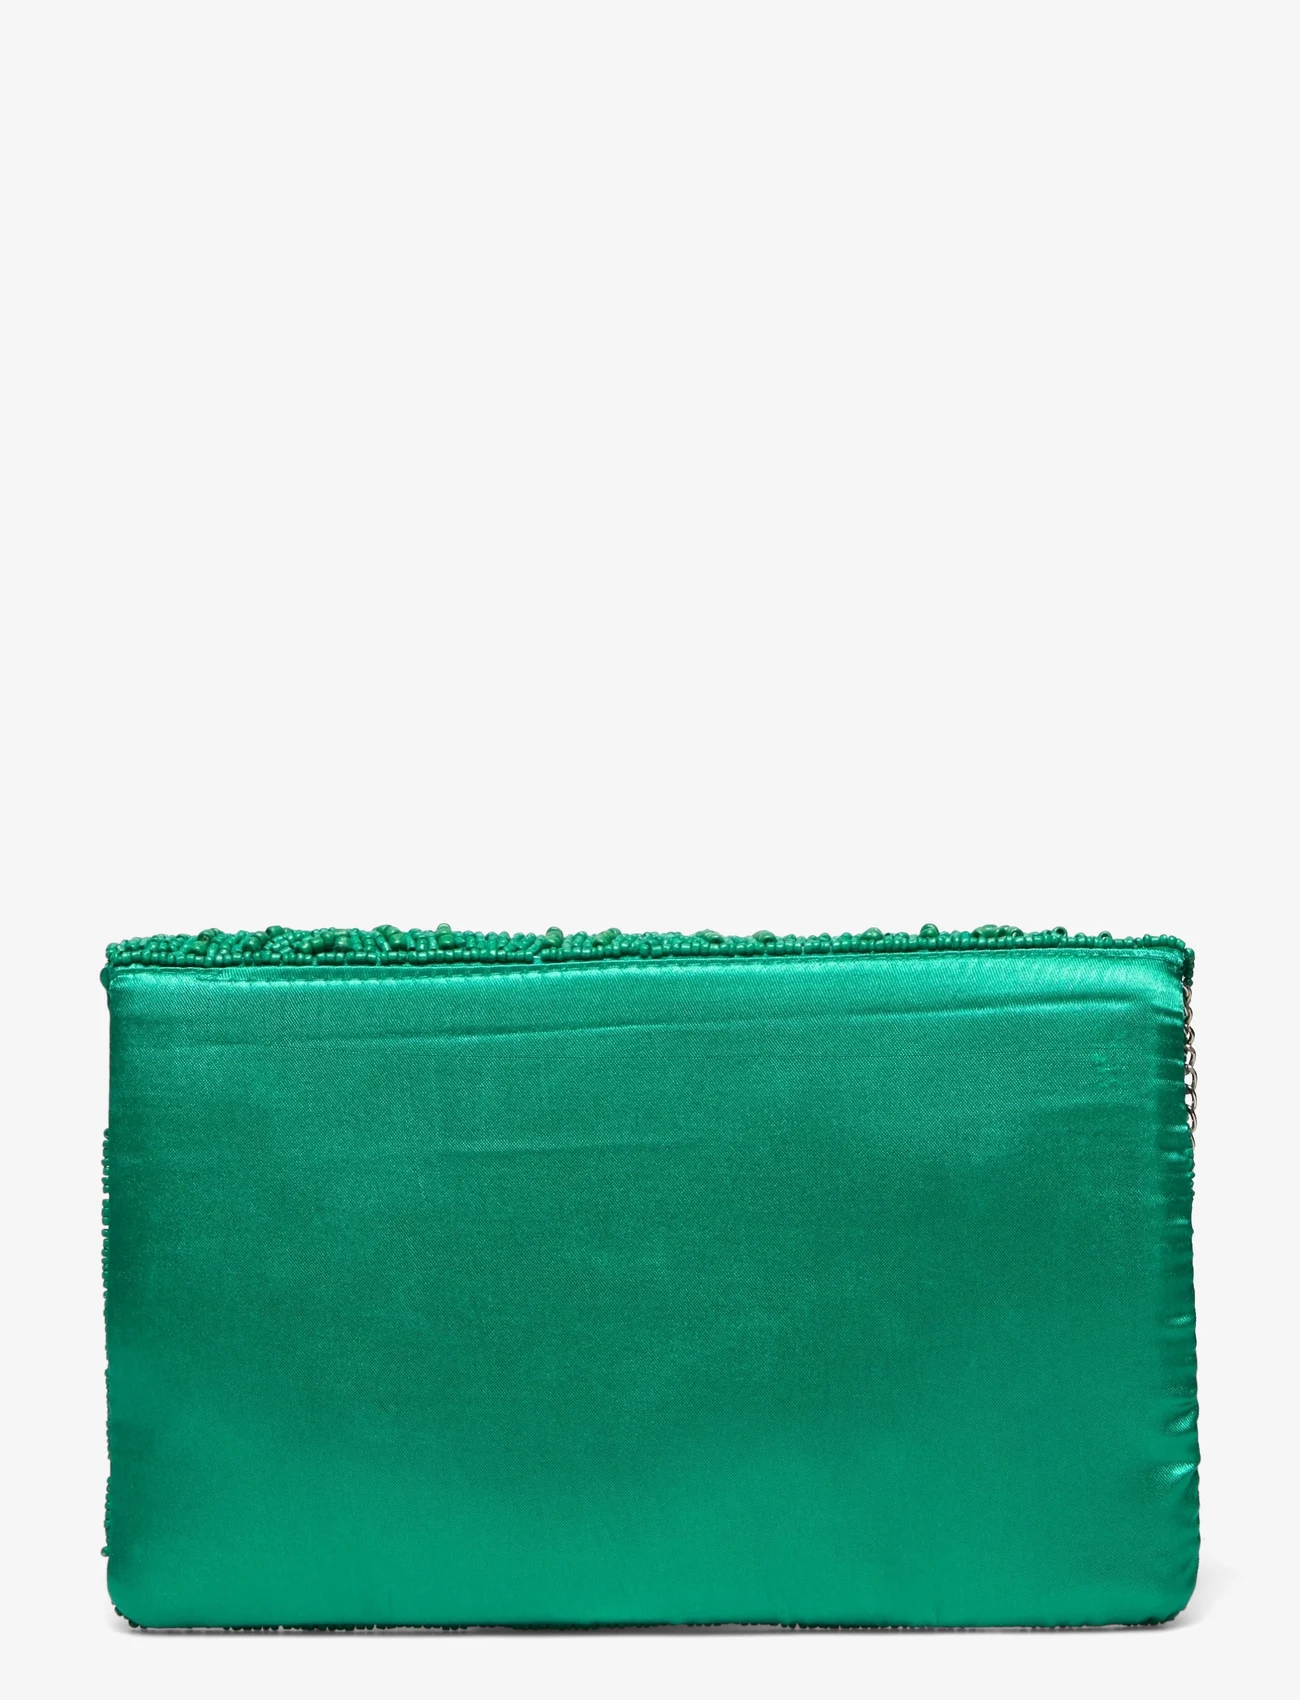 Pipol's Bazaar - Casablanca Green Clutch Bag - green - 1